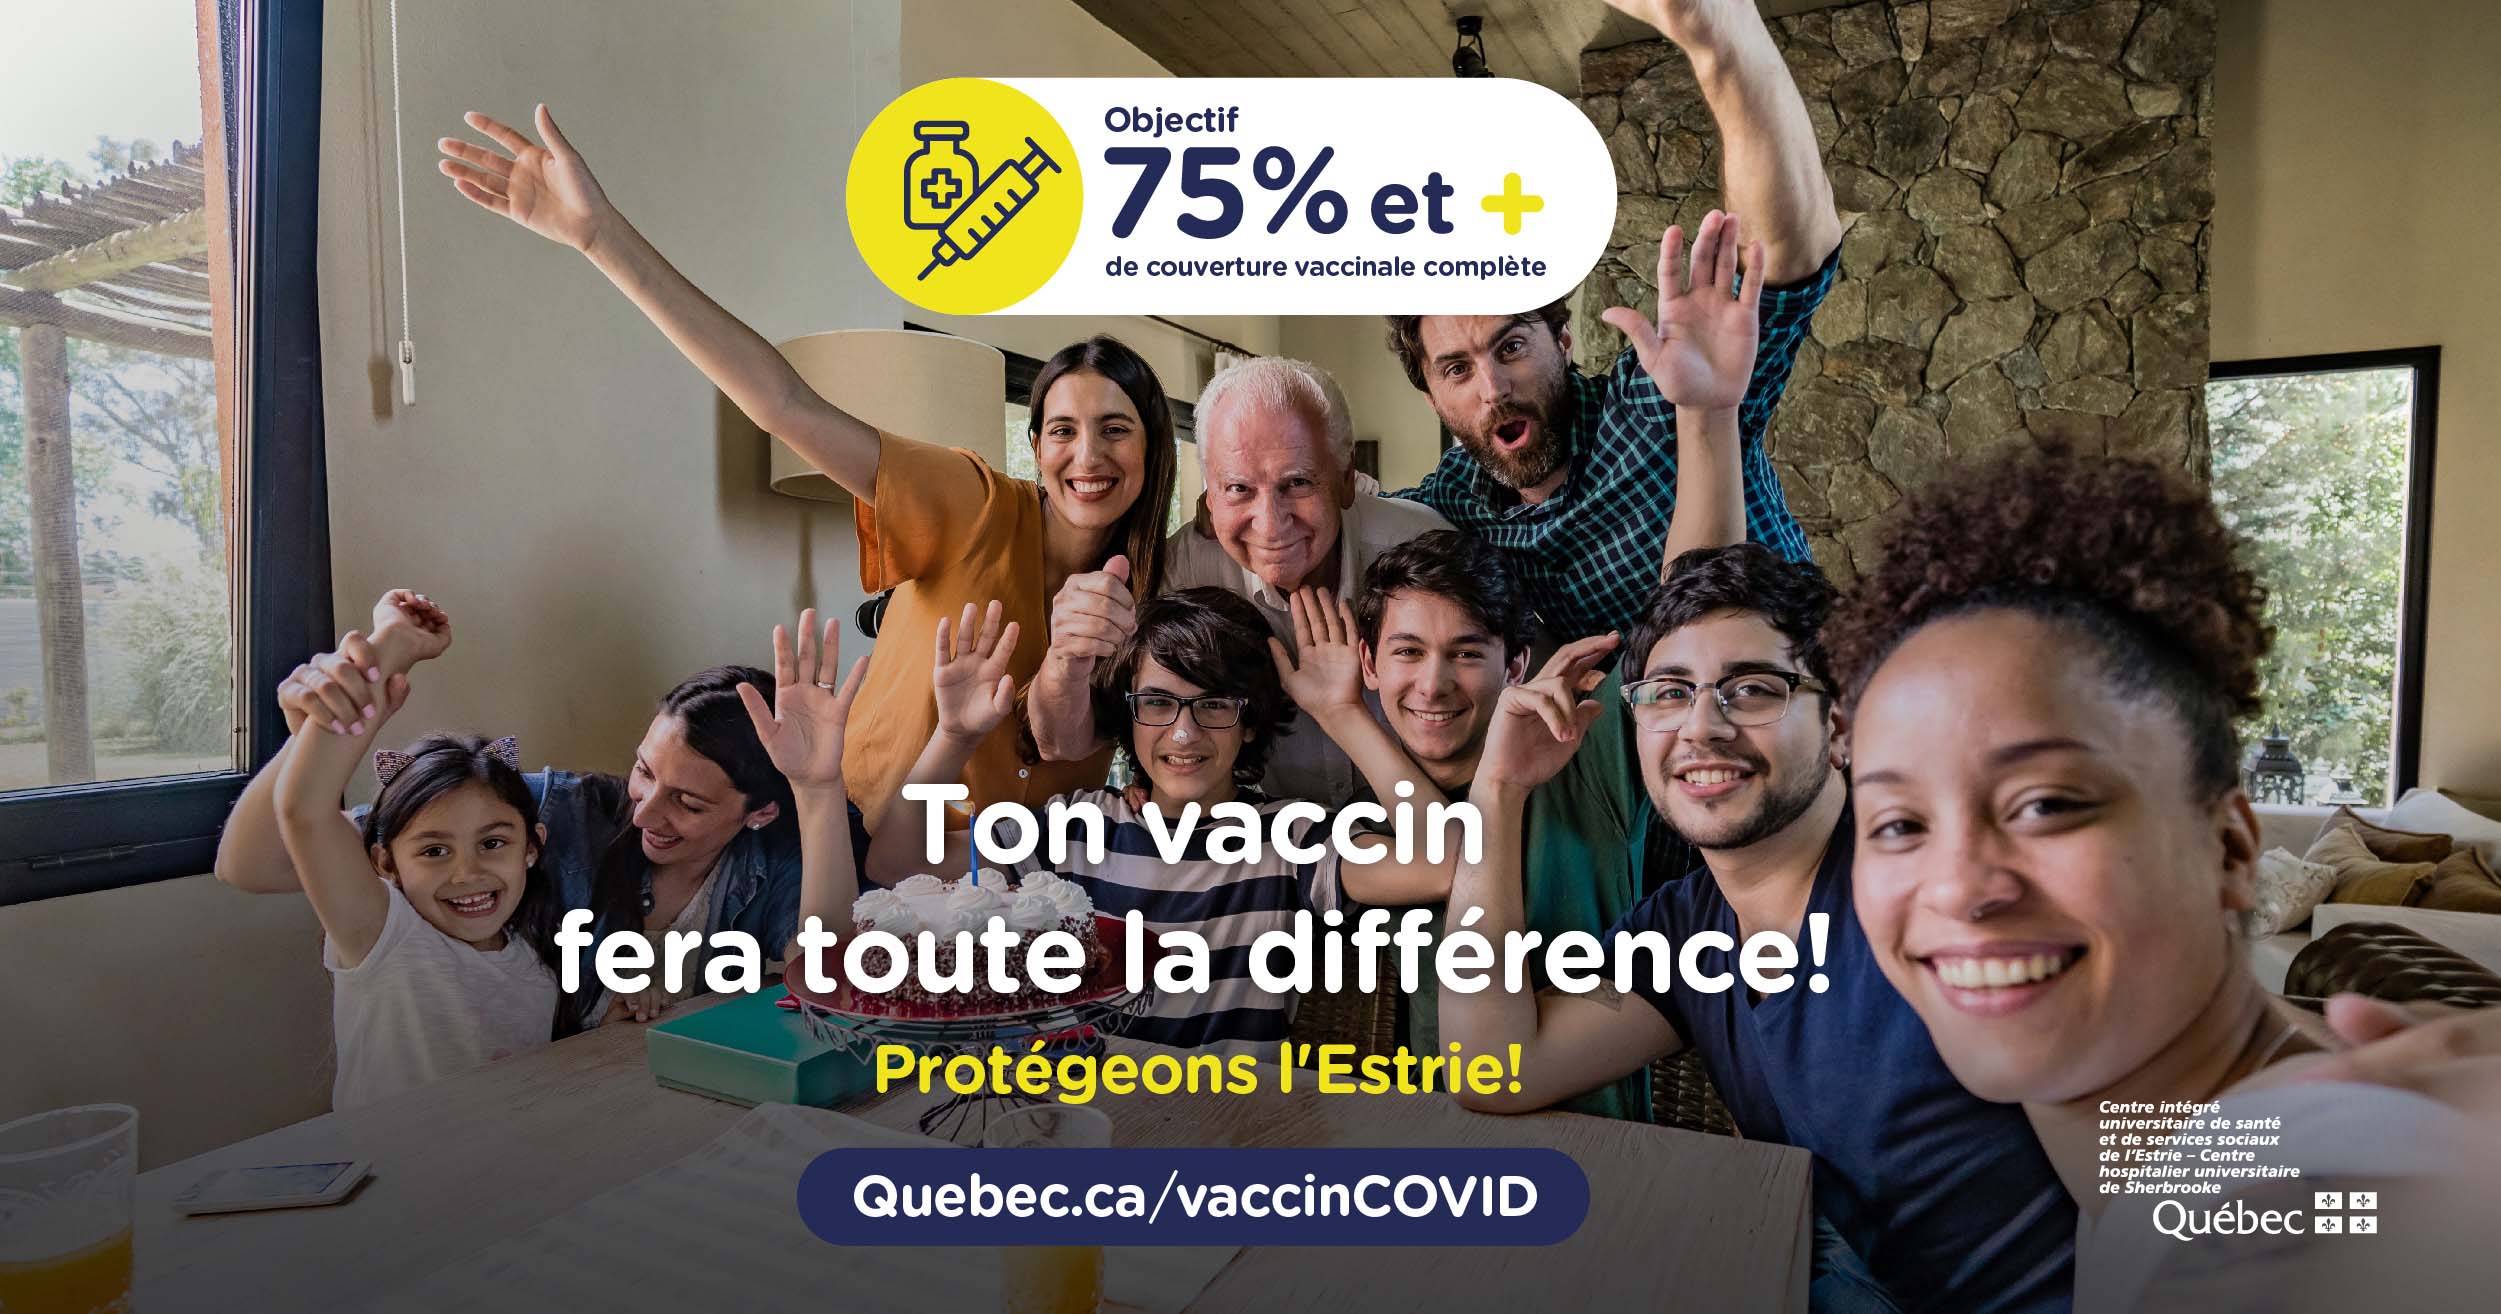 75-Couverturevaccinale ProtegeonsLEstrie-FR 1200x630-FB -1 2